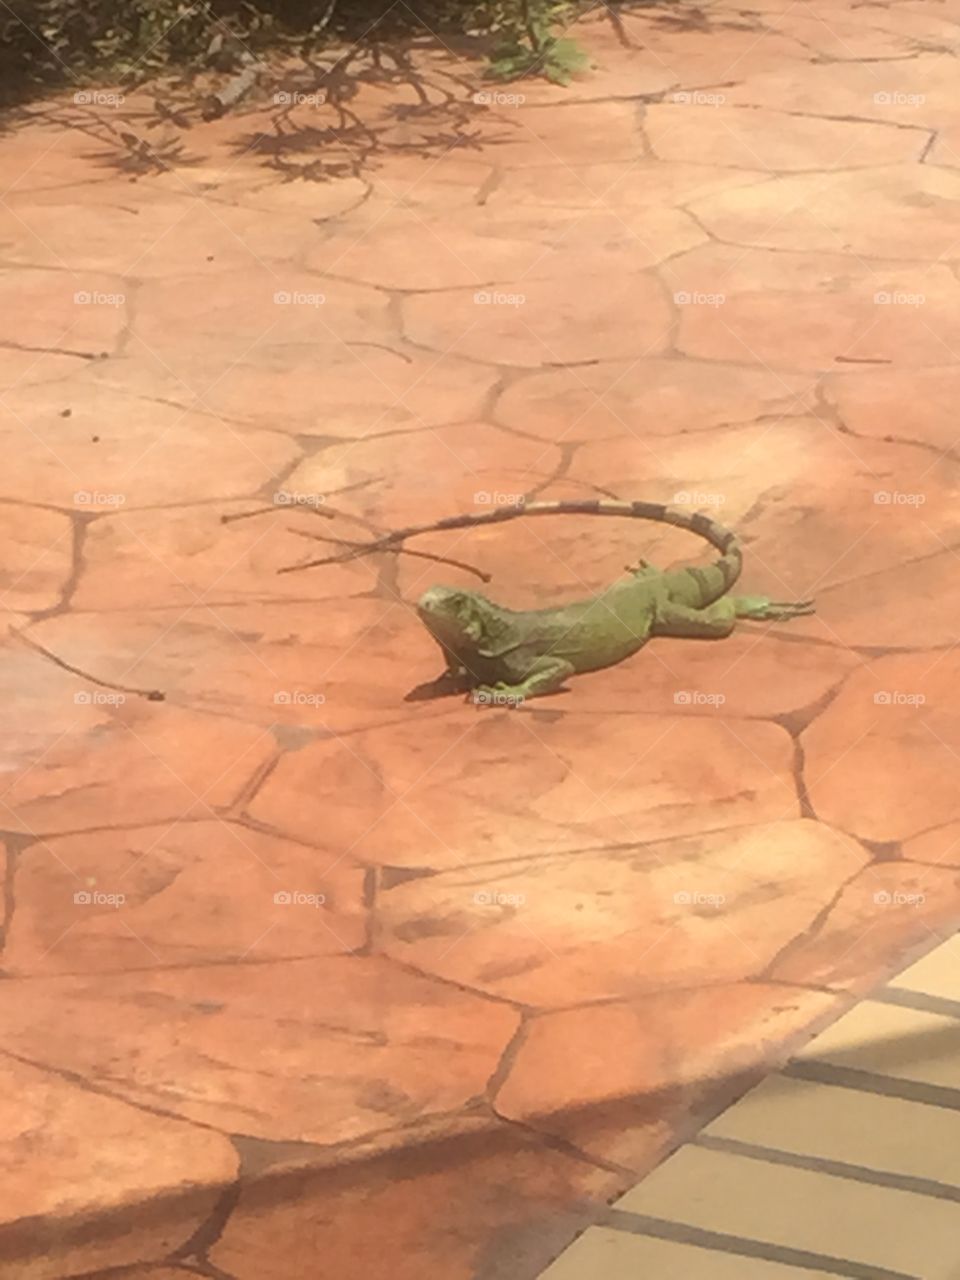 Lizard in Aruba. Lizard near the pool at an Aruba resort